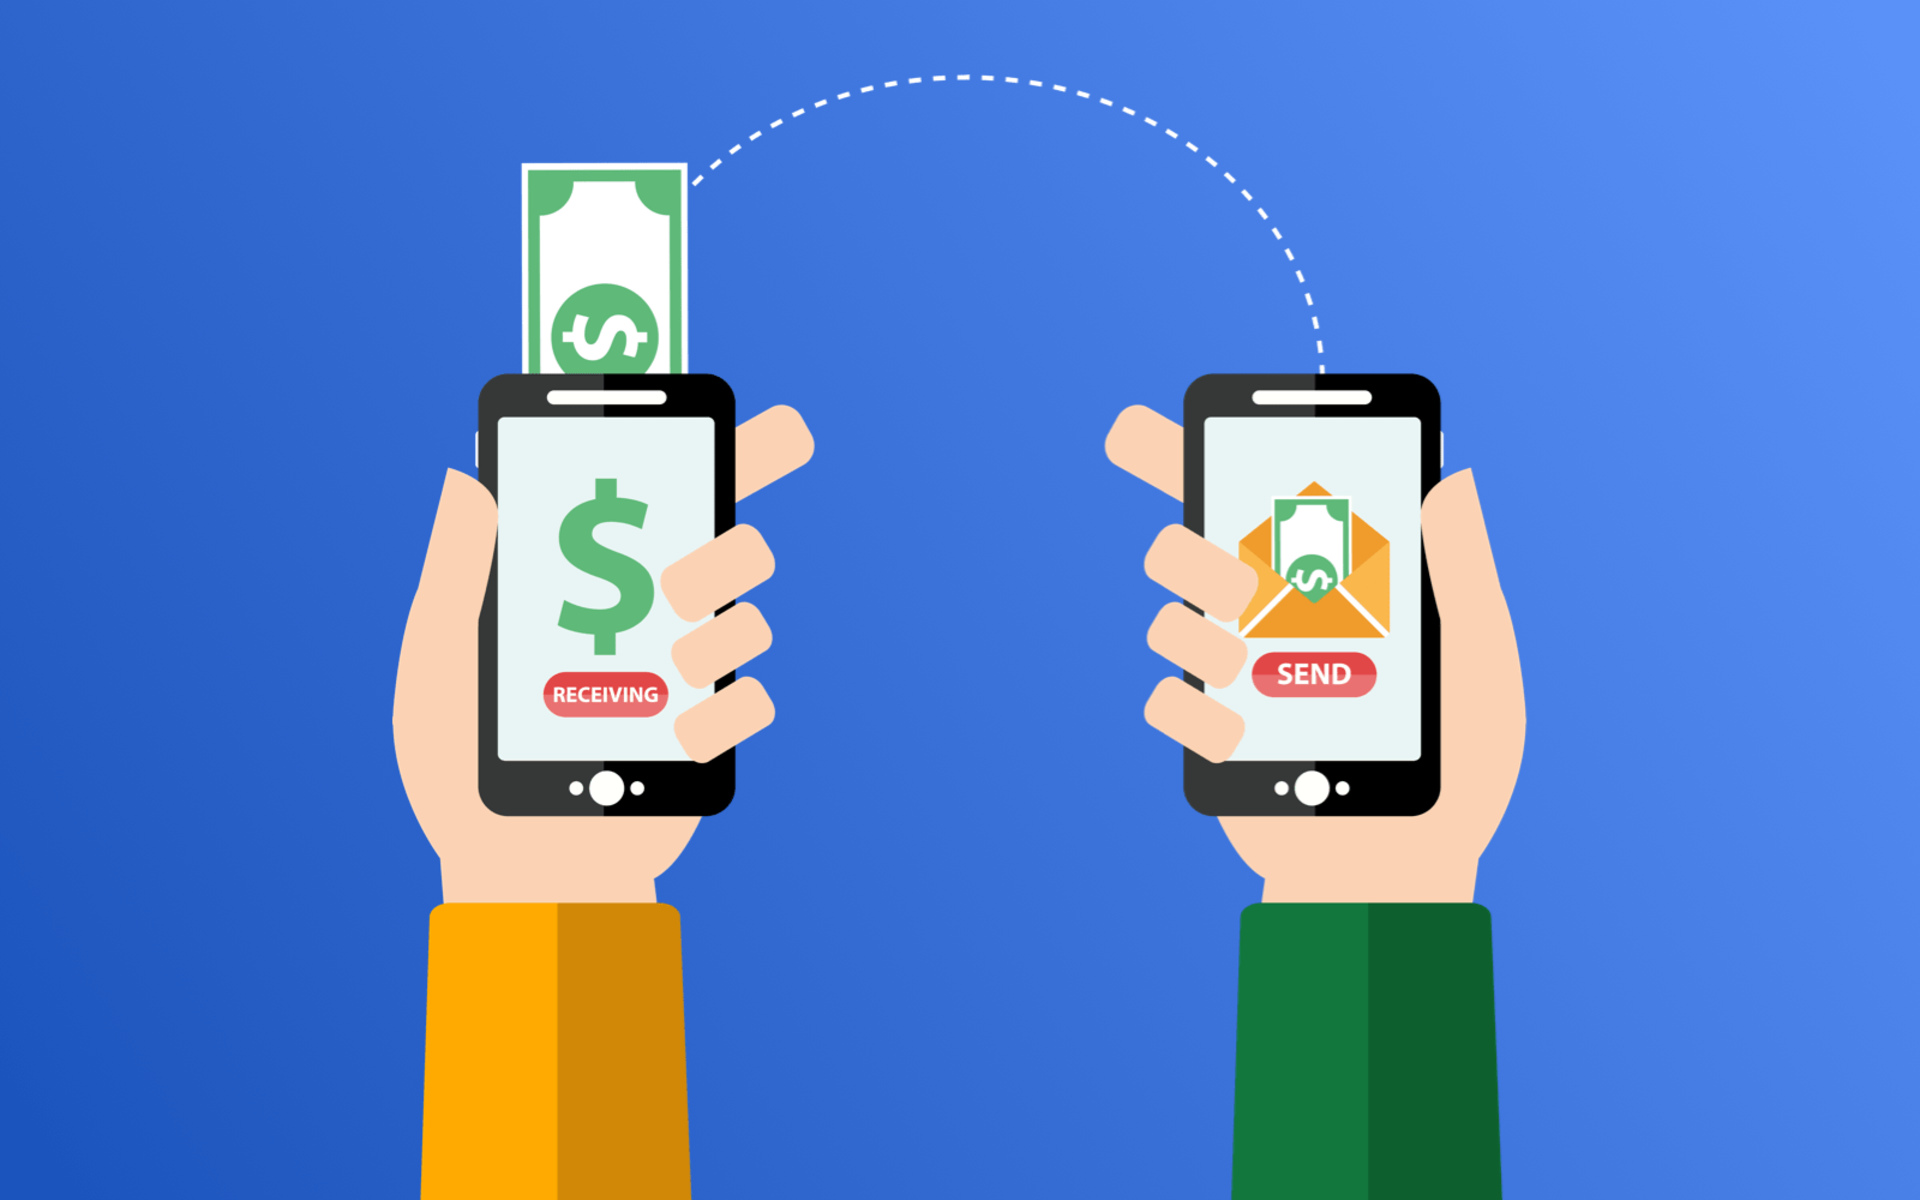 How To Make A Peer-To-Peer Money Transfer App